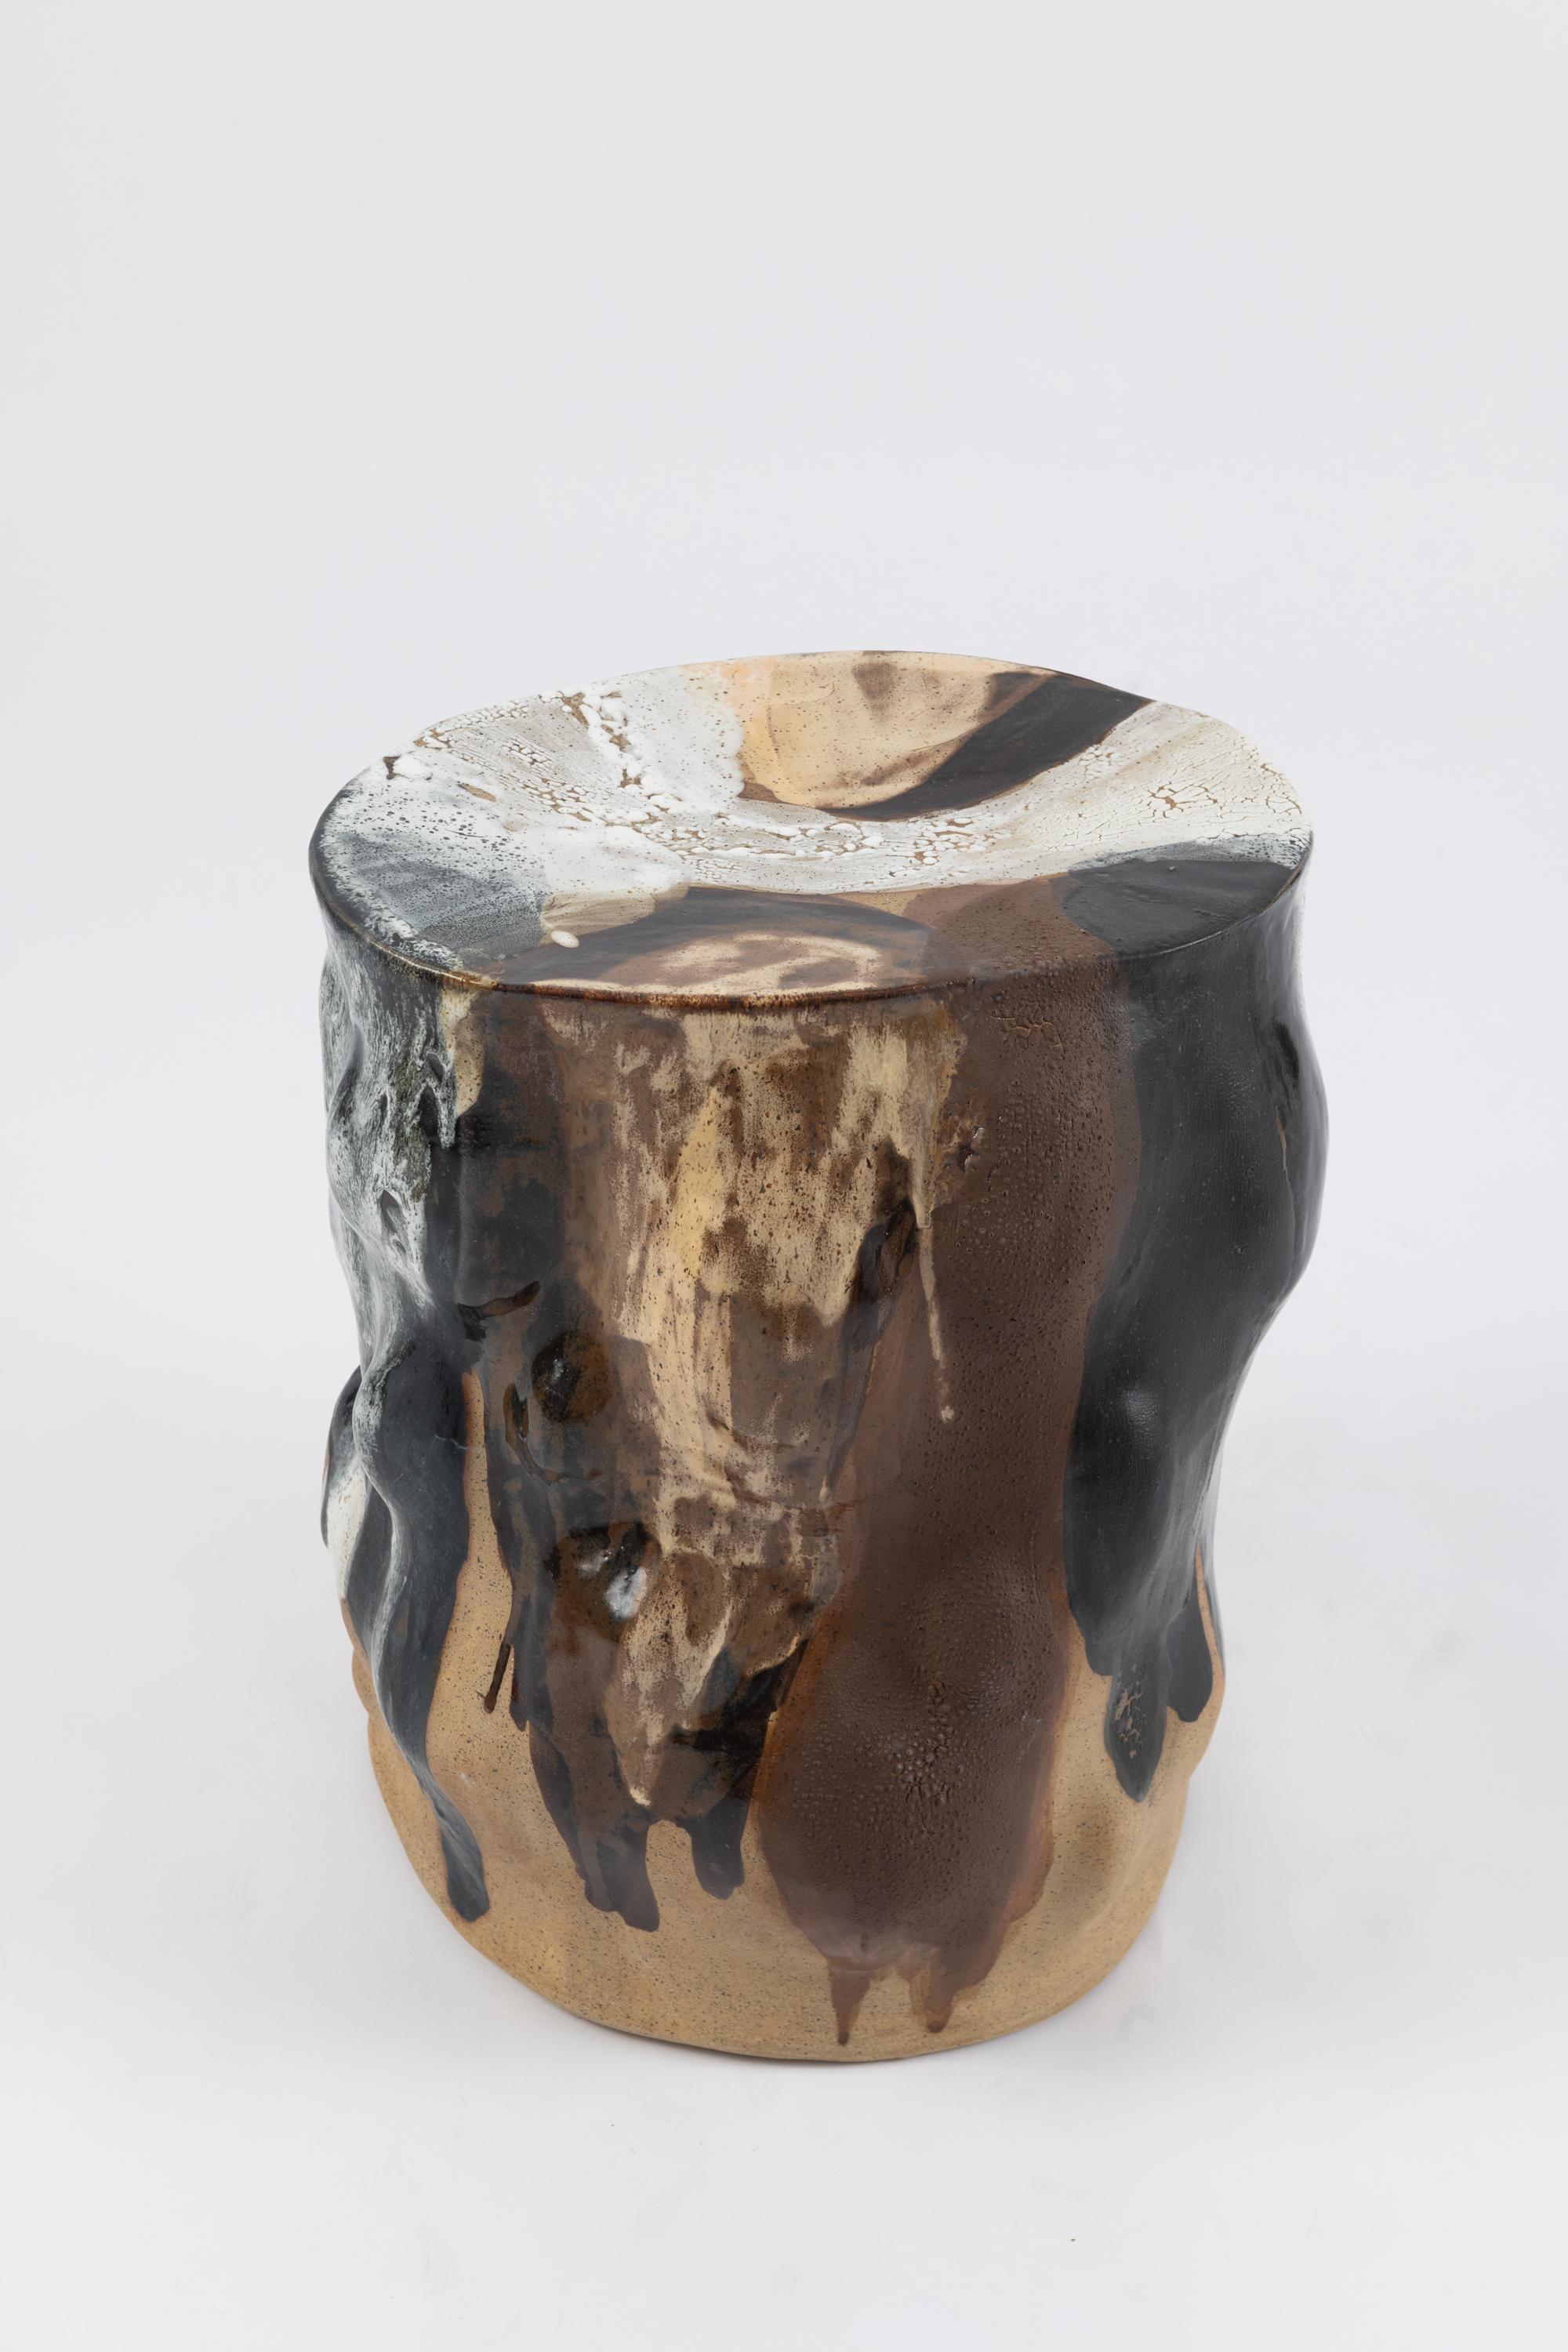 Trish DeMasi
Spora Stool/Table, 2022
Glazed and raw stoneware
19 x 15 x 10.5 in